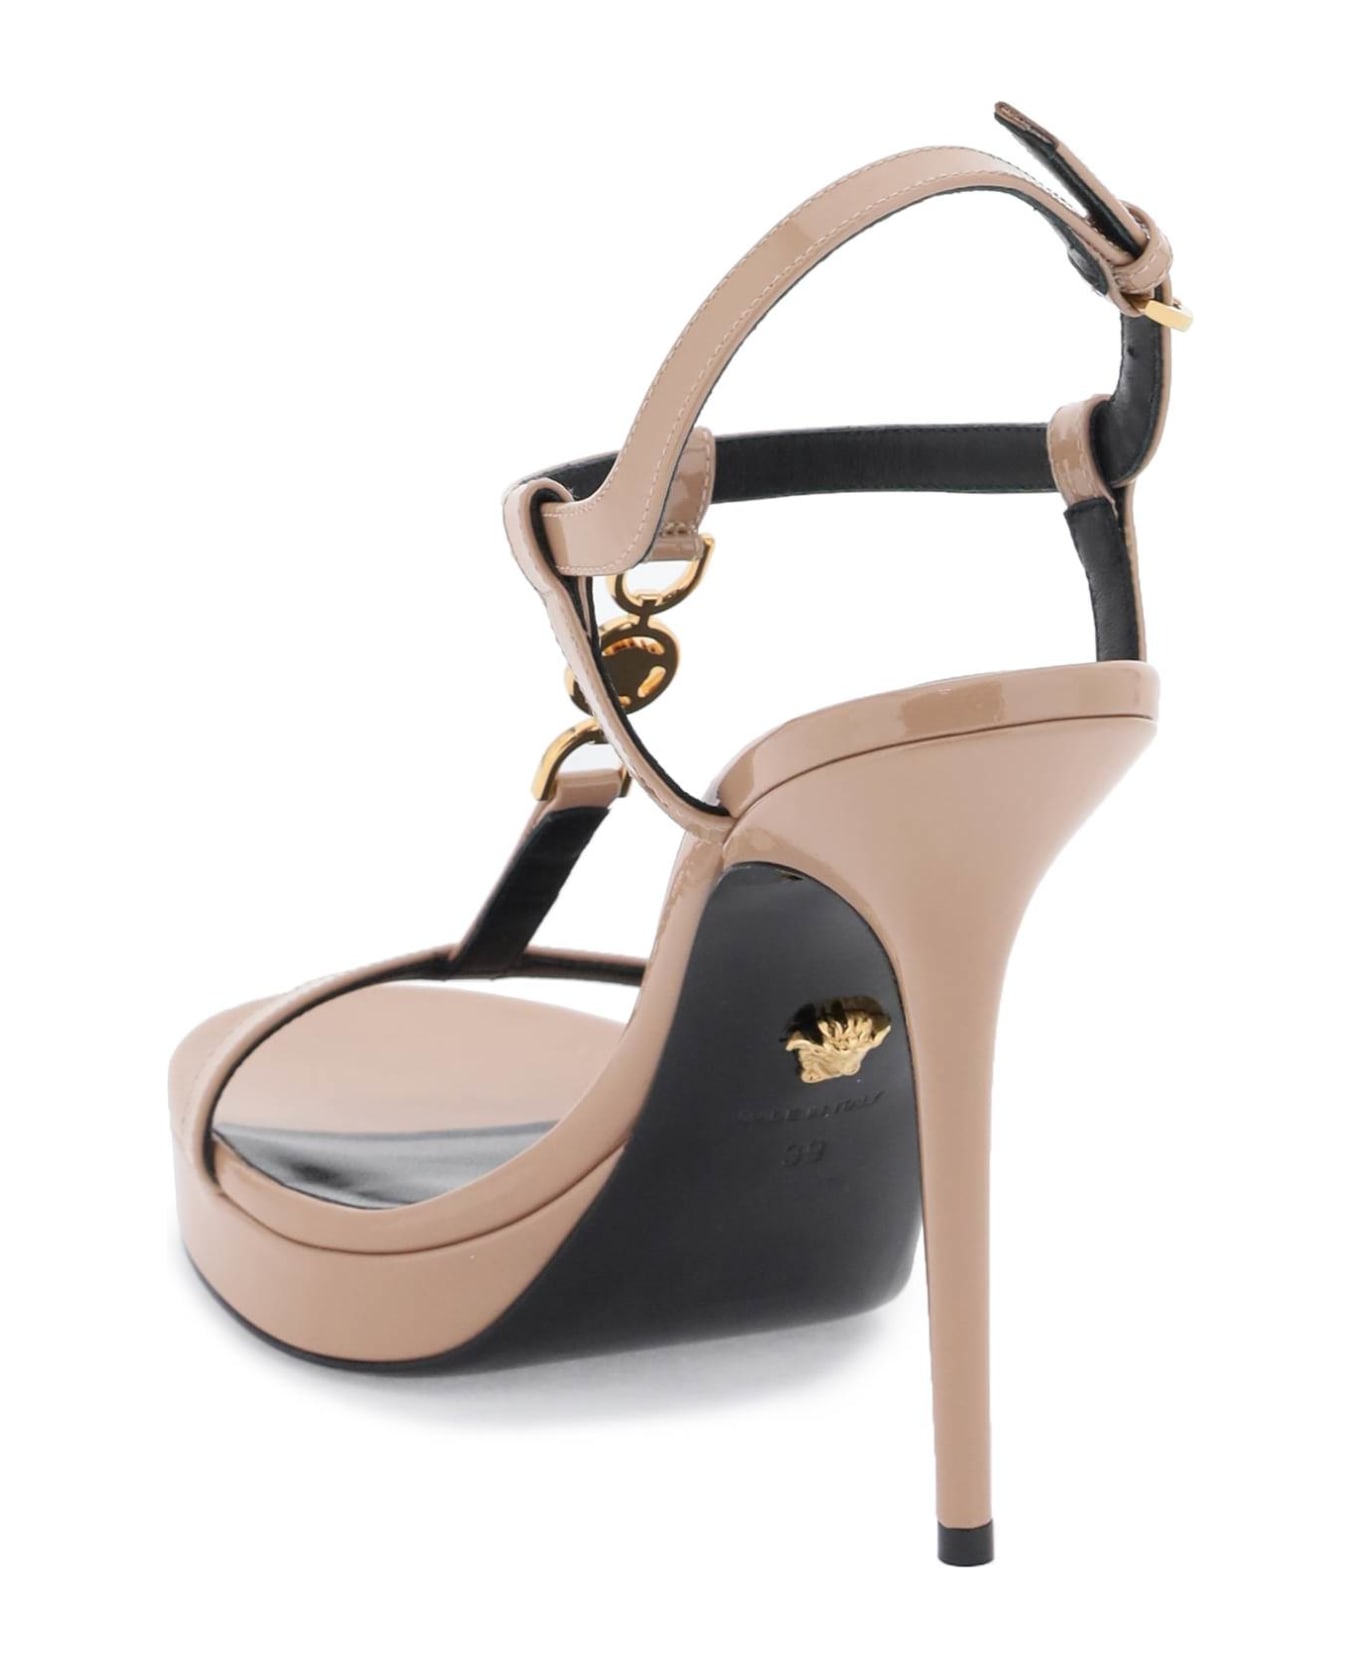 Versace Medusa '95 Patent Leather Sandals - BLUSH VERSACE GOLD